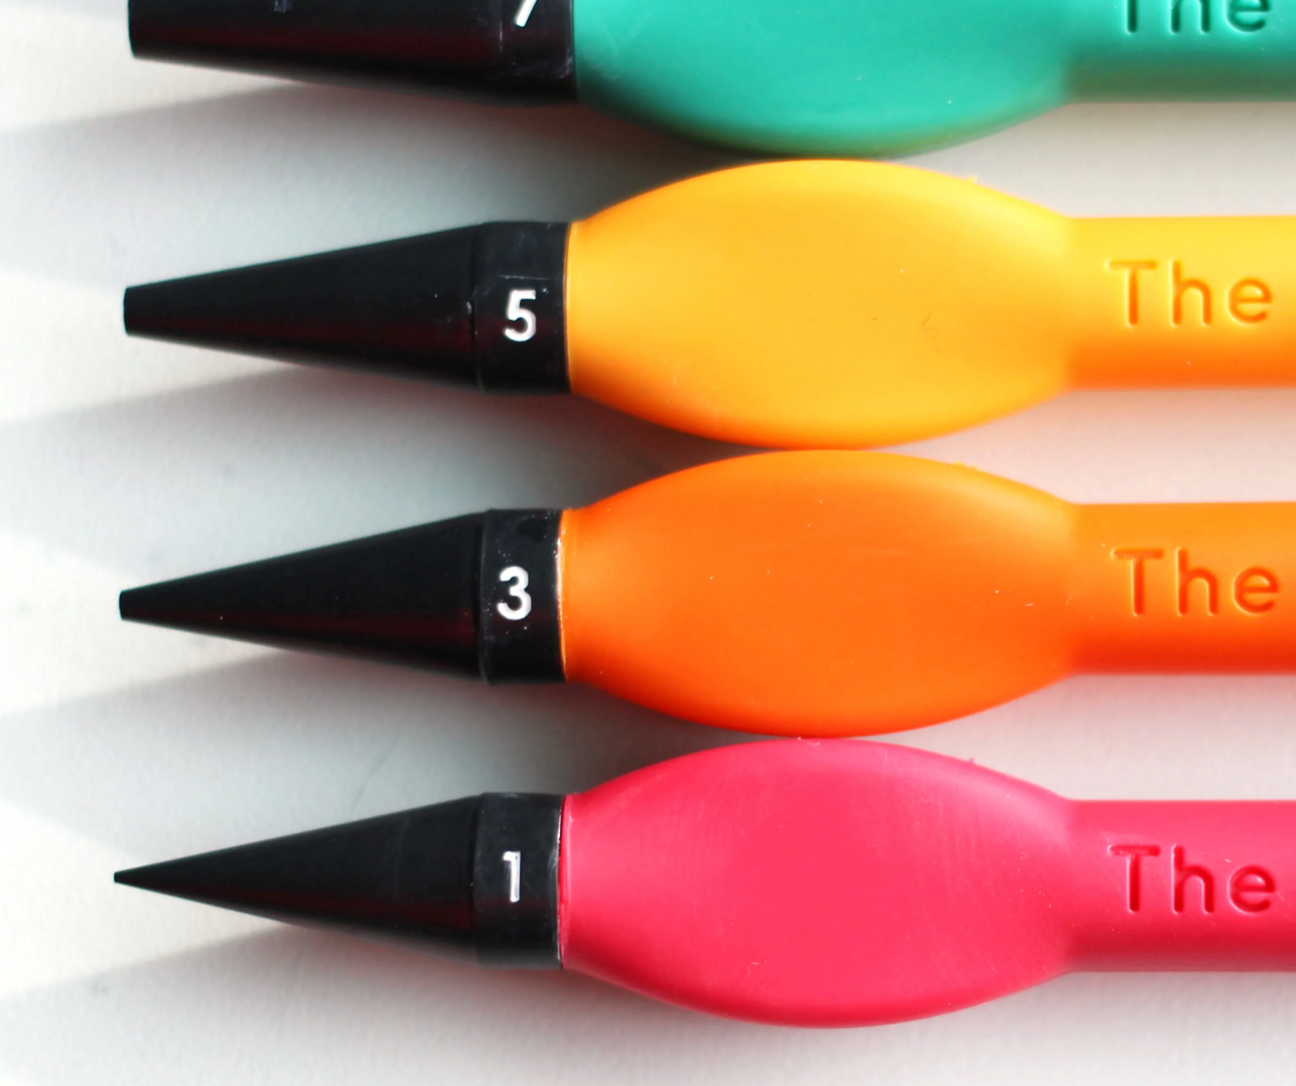 7 Ergonomic Dot Painting Tools – Joy Color Art®